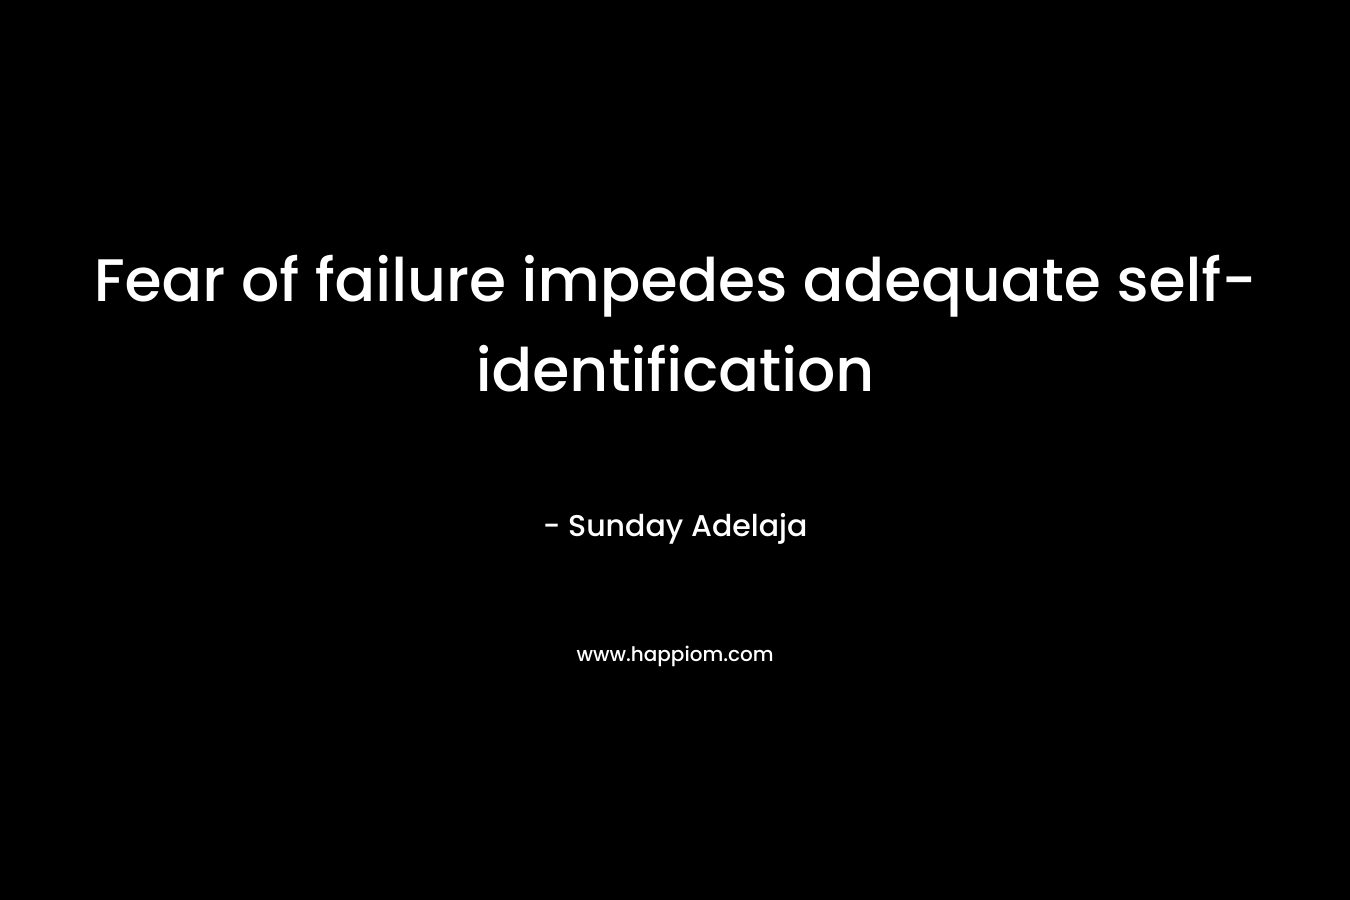 Fear of failure impedes adequate self-identification